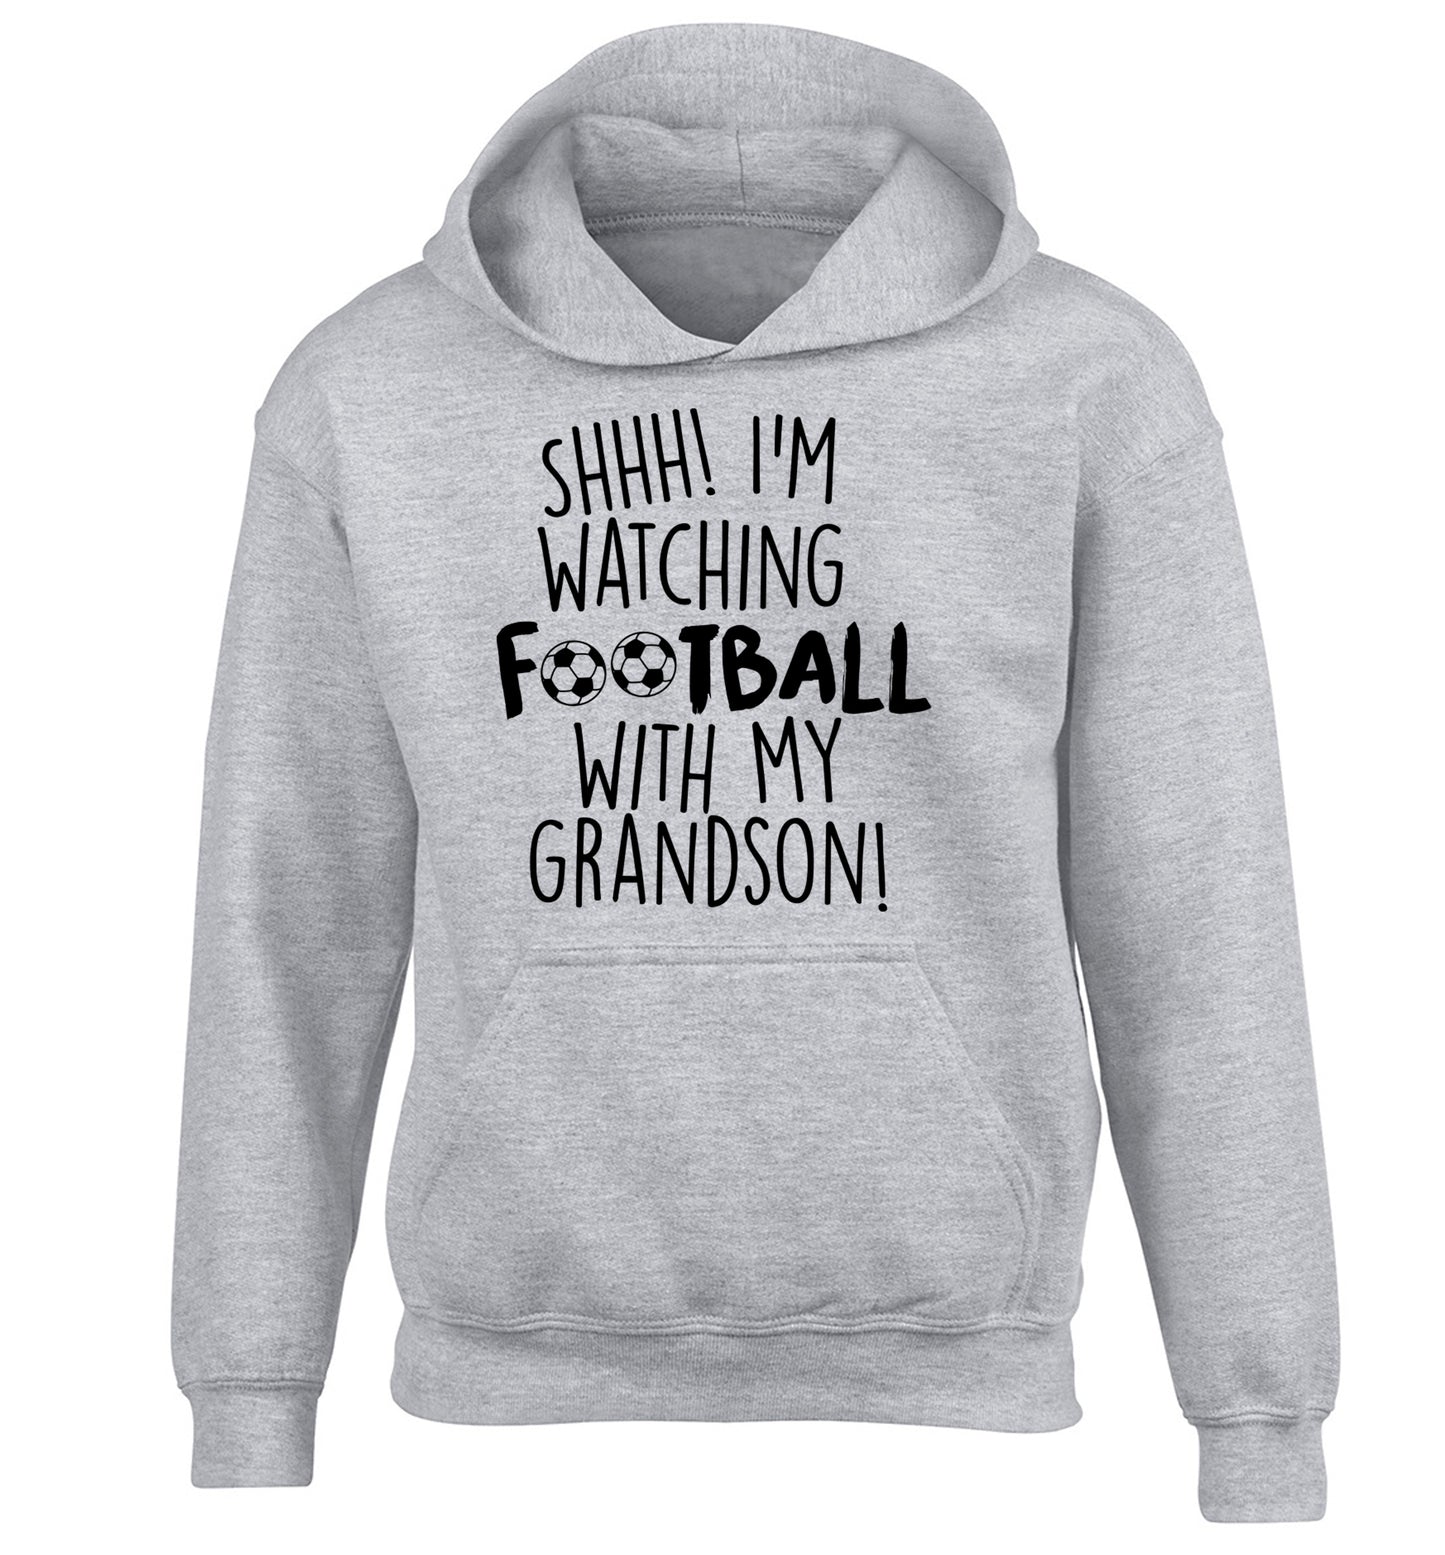 Shhh I'm watching football with my grandson children's grey hoodie 12-14 Years